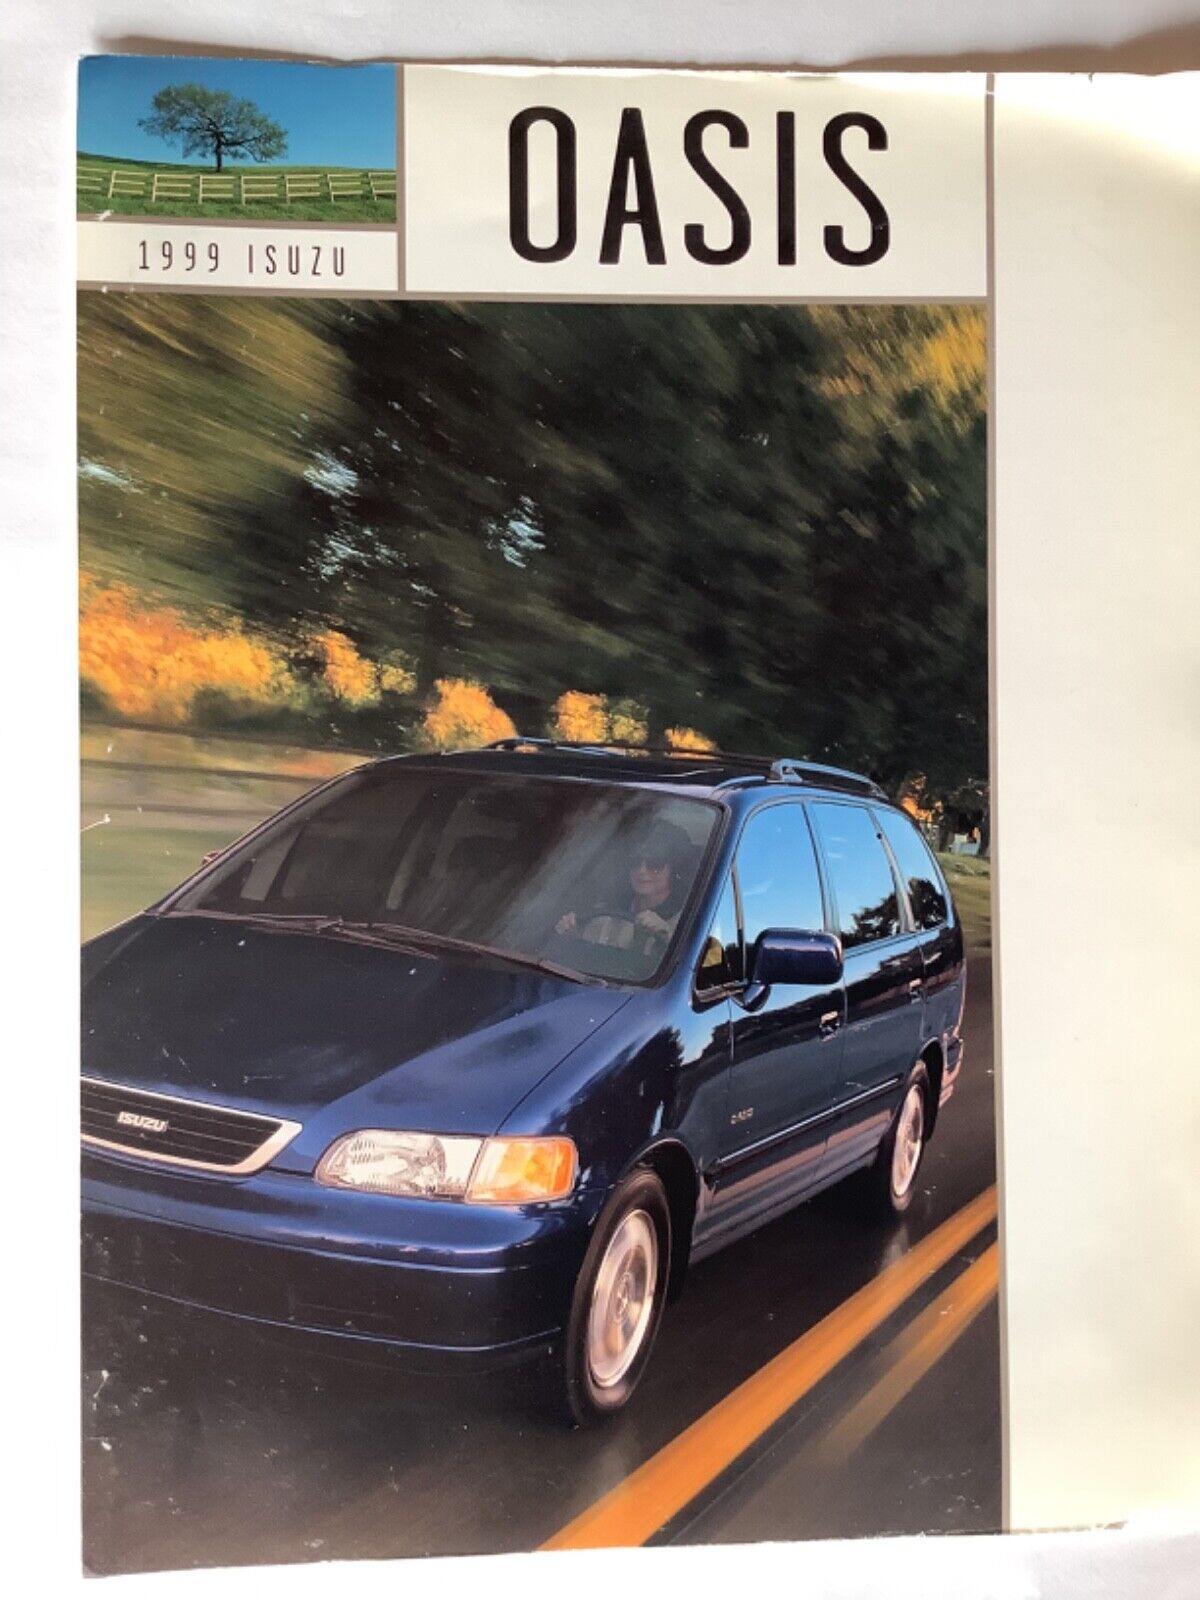 1999 Isuzu Oasis Sales Brochure | eBay